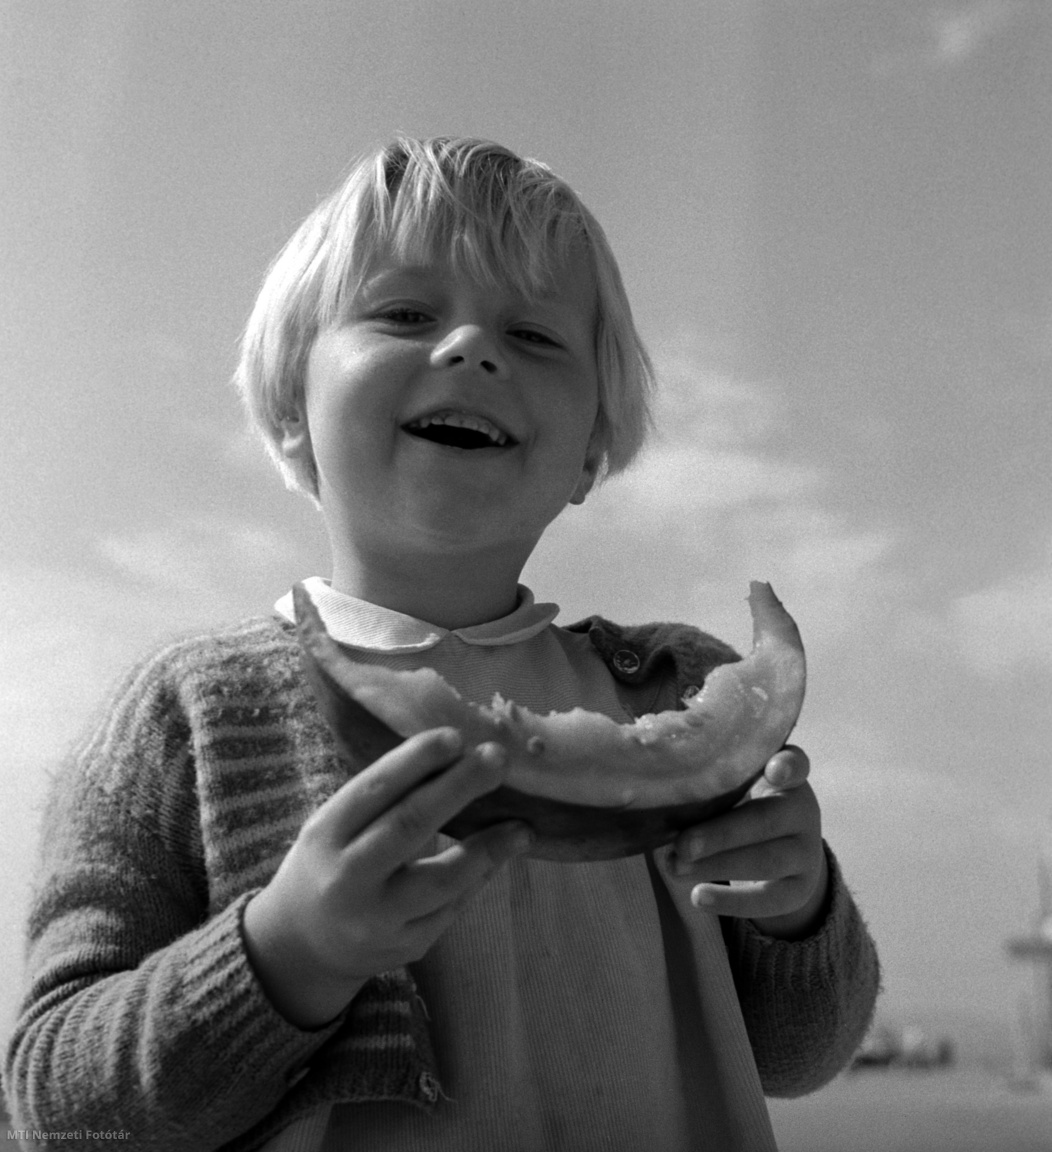 Siófok, 16 Σεπτεμβρίου 1965. Ένα παιδί σε διακοπές στη λίμνη Balaton τρώει ένα καρπούζι